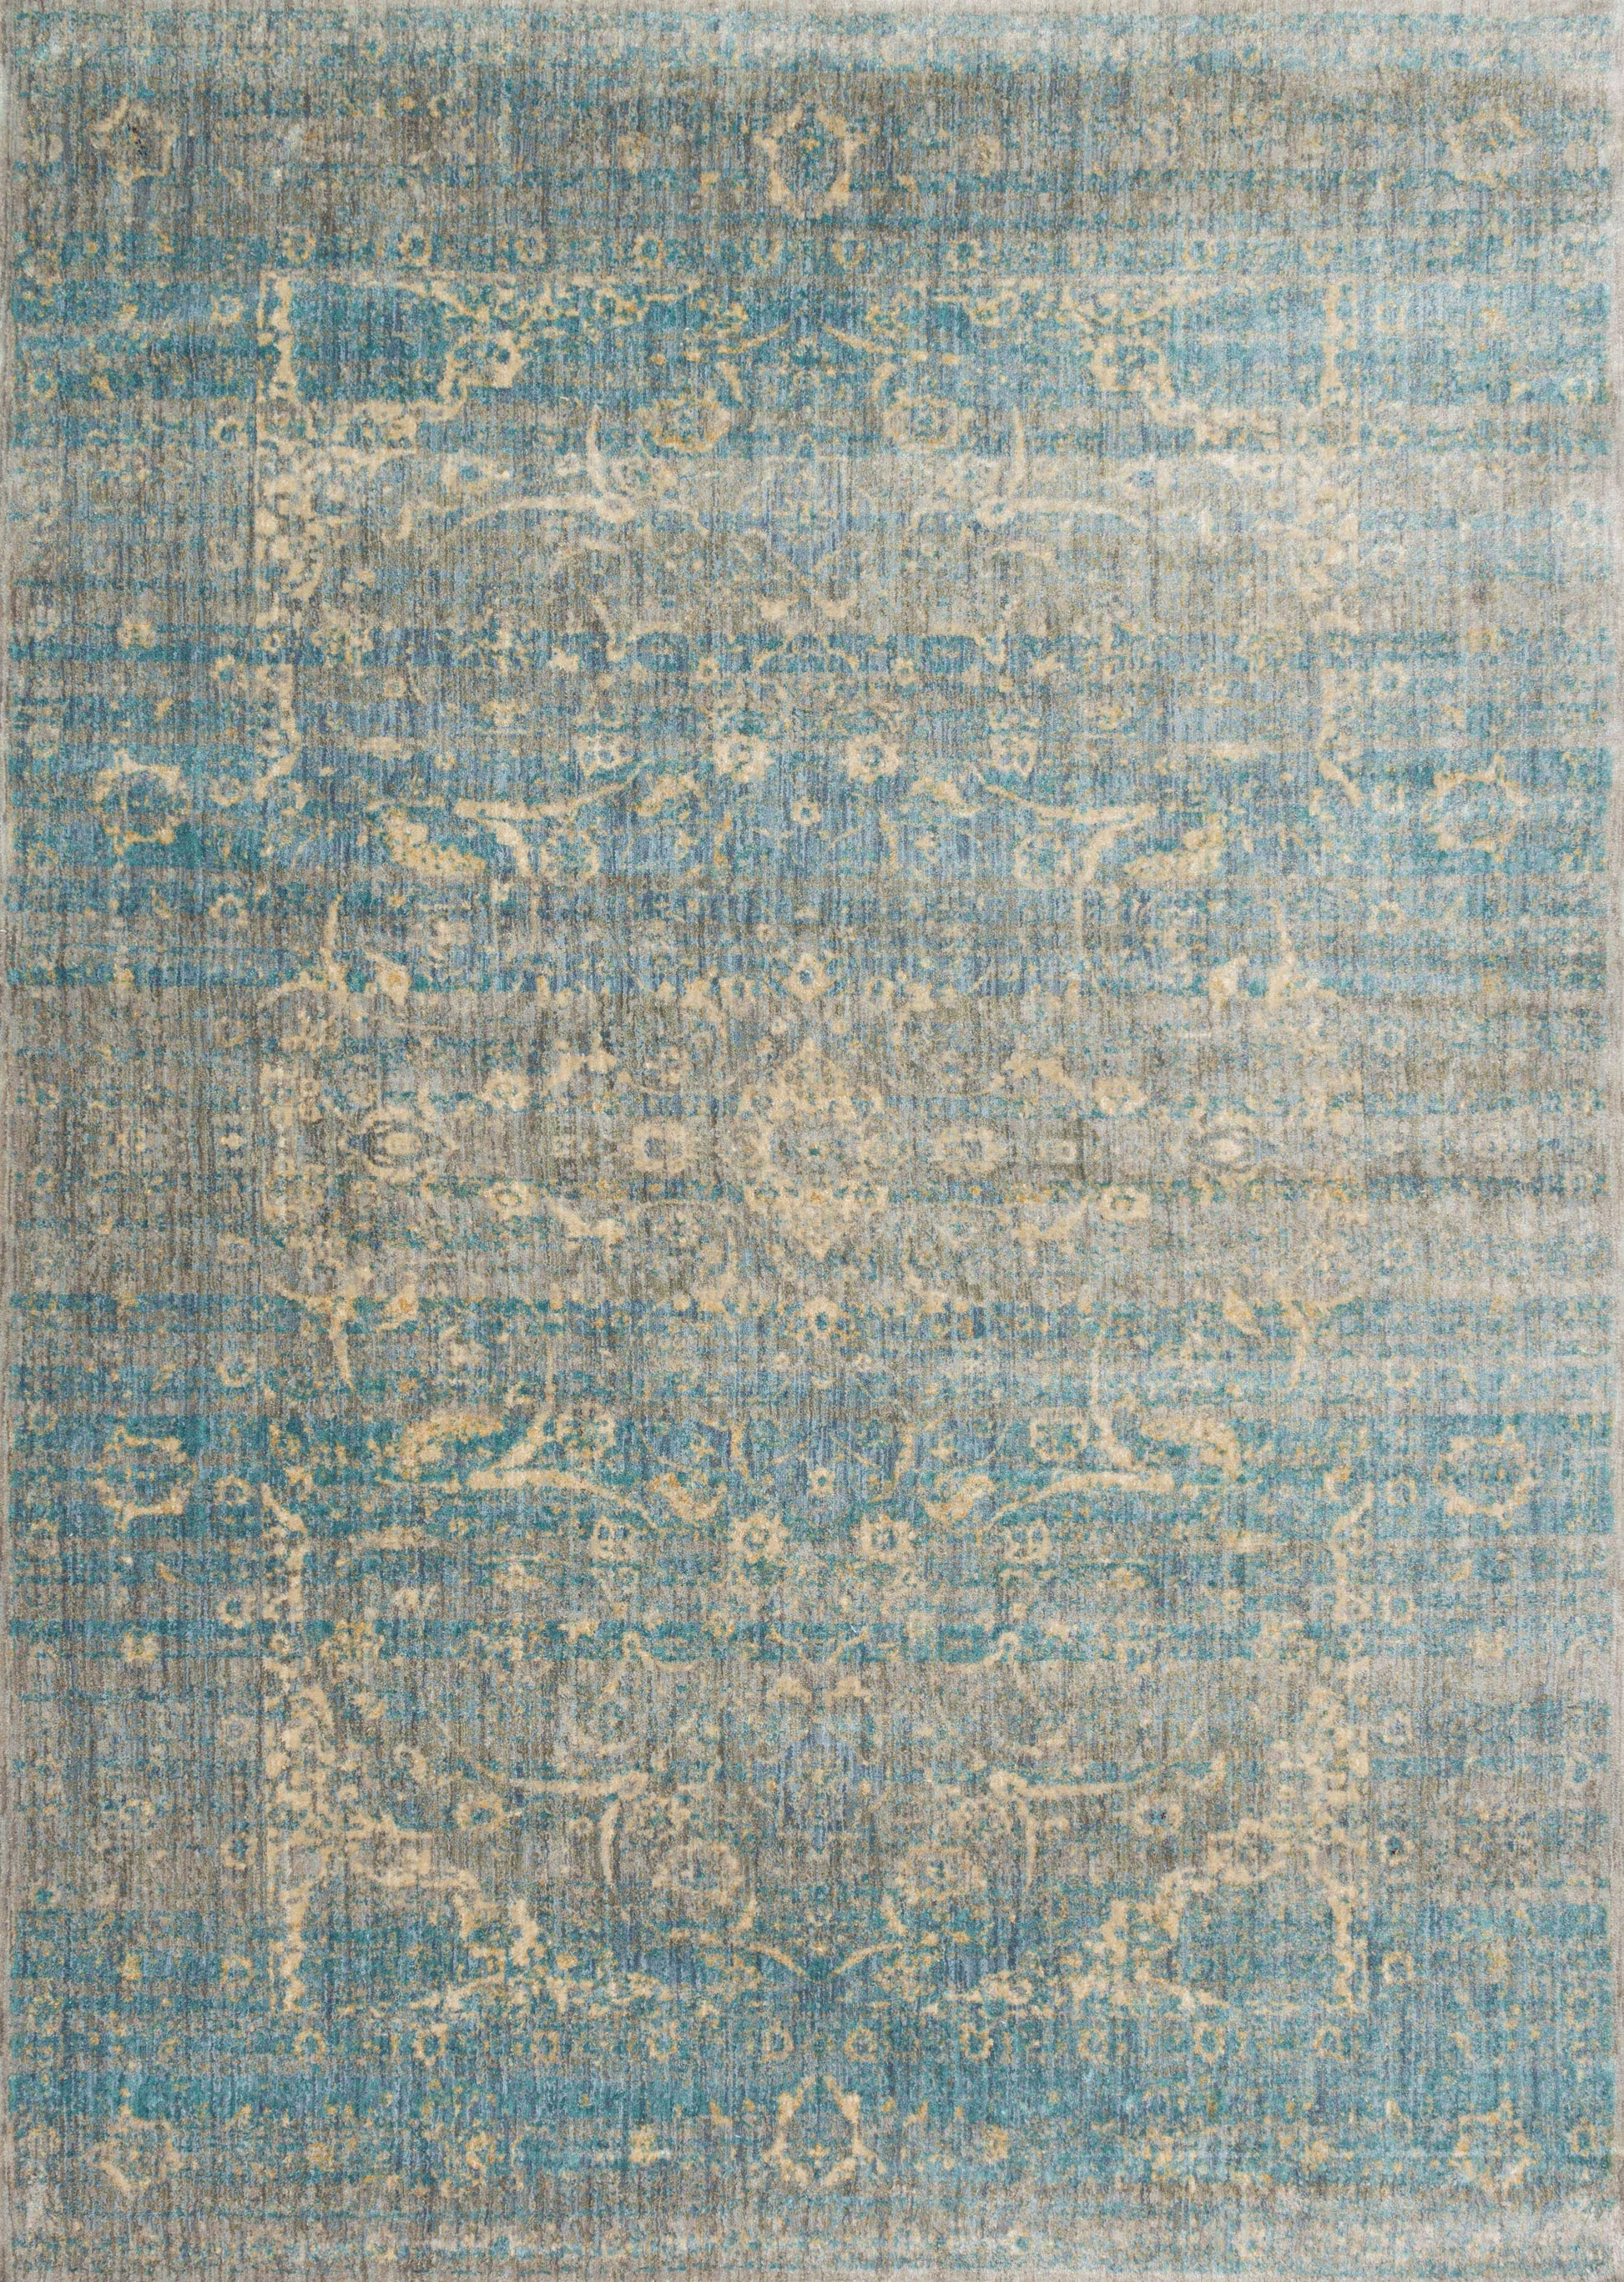 A picture of Loloi's Anastasia rug, in style AF-10, color Lt. Blue / Mist